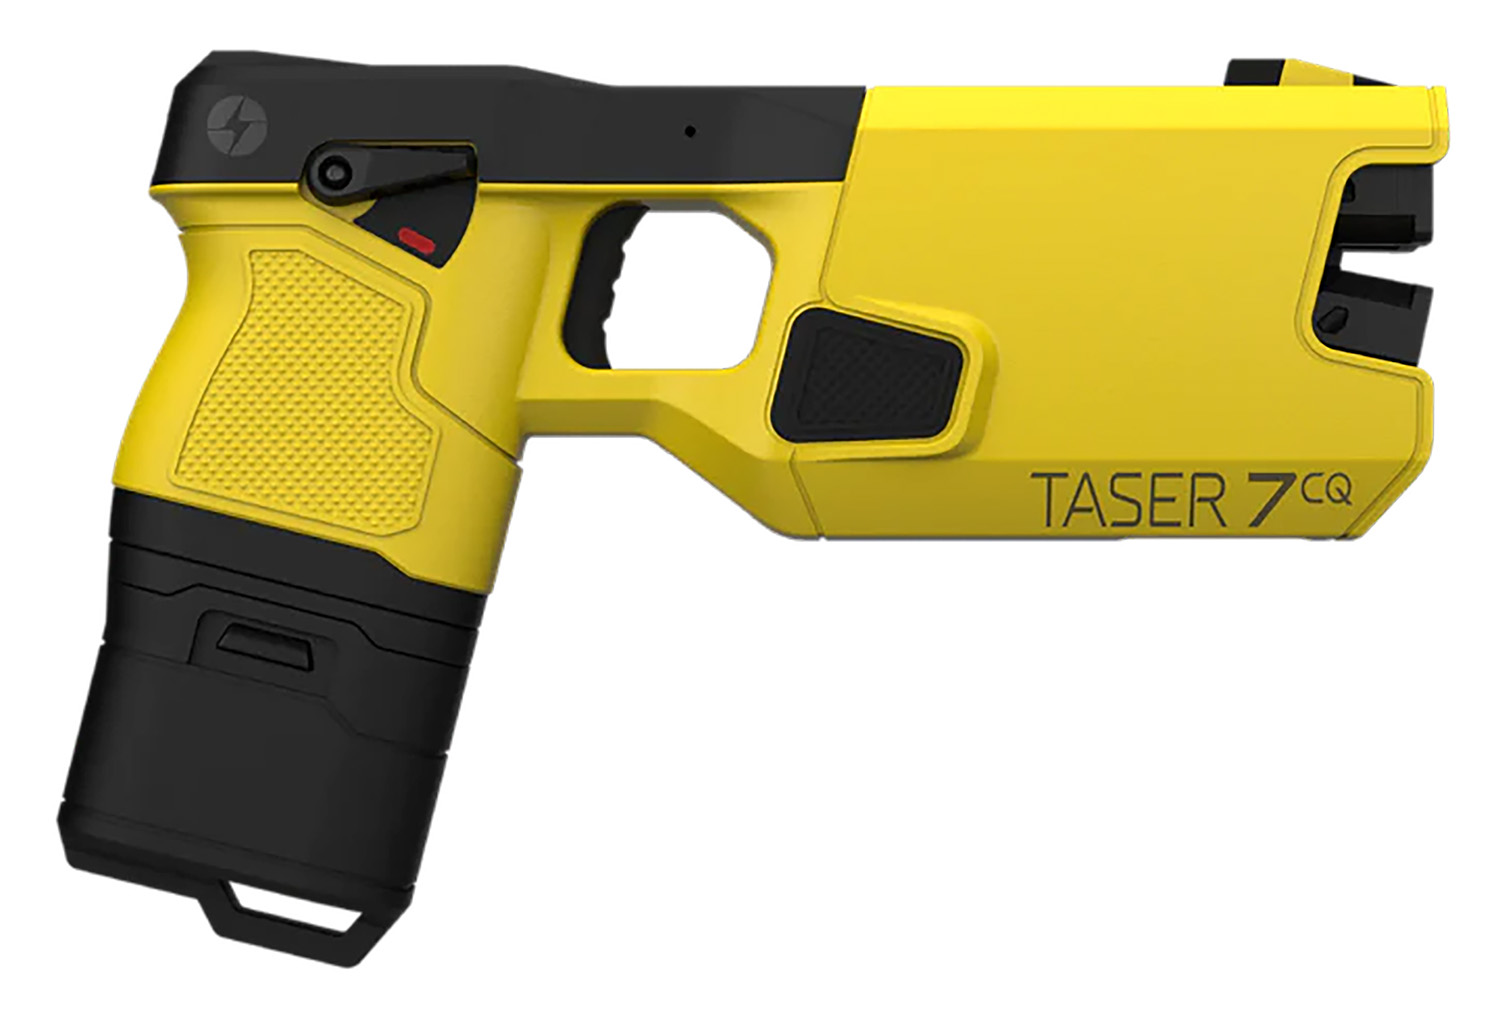 AXON/TASER (LC PRODUCTS) 20285 Taser 7 CQ Home Defense Range of 12 ft Black/Yellow